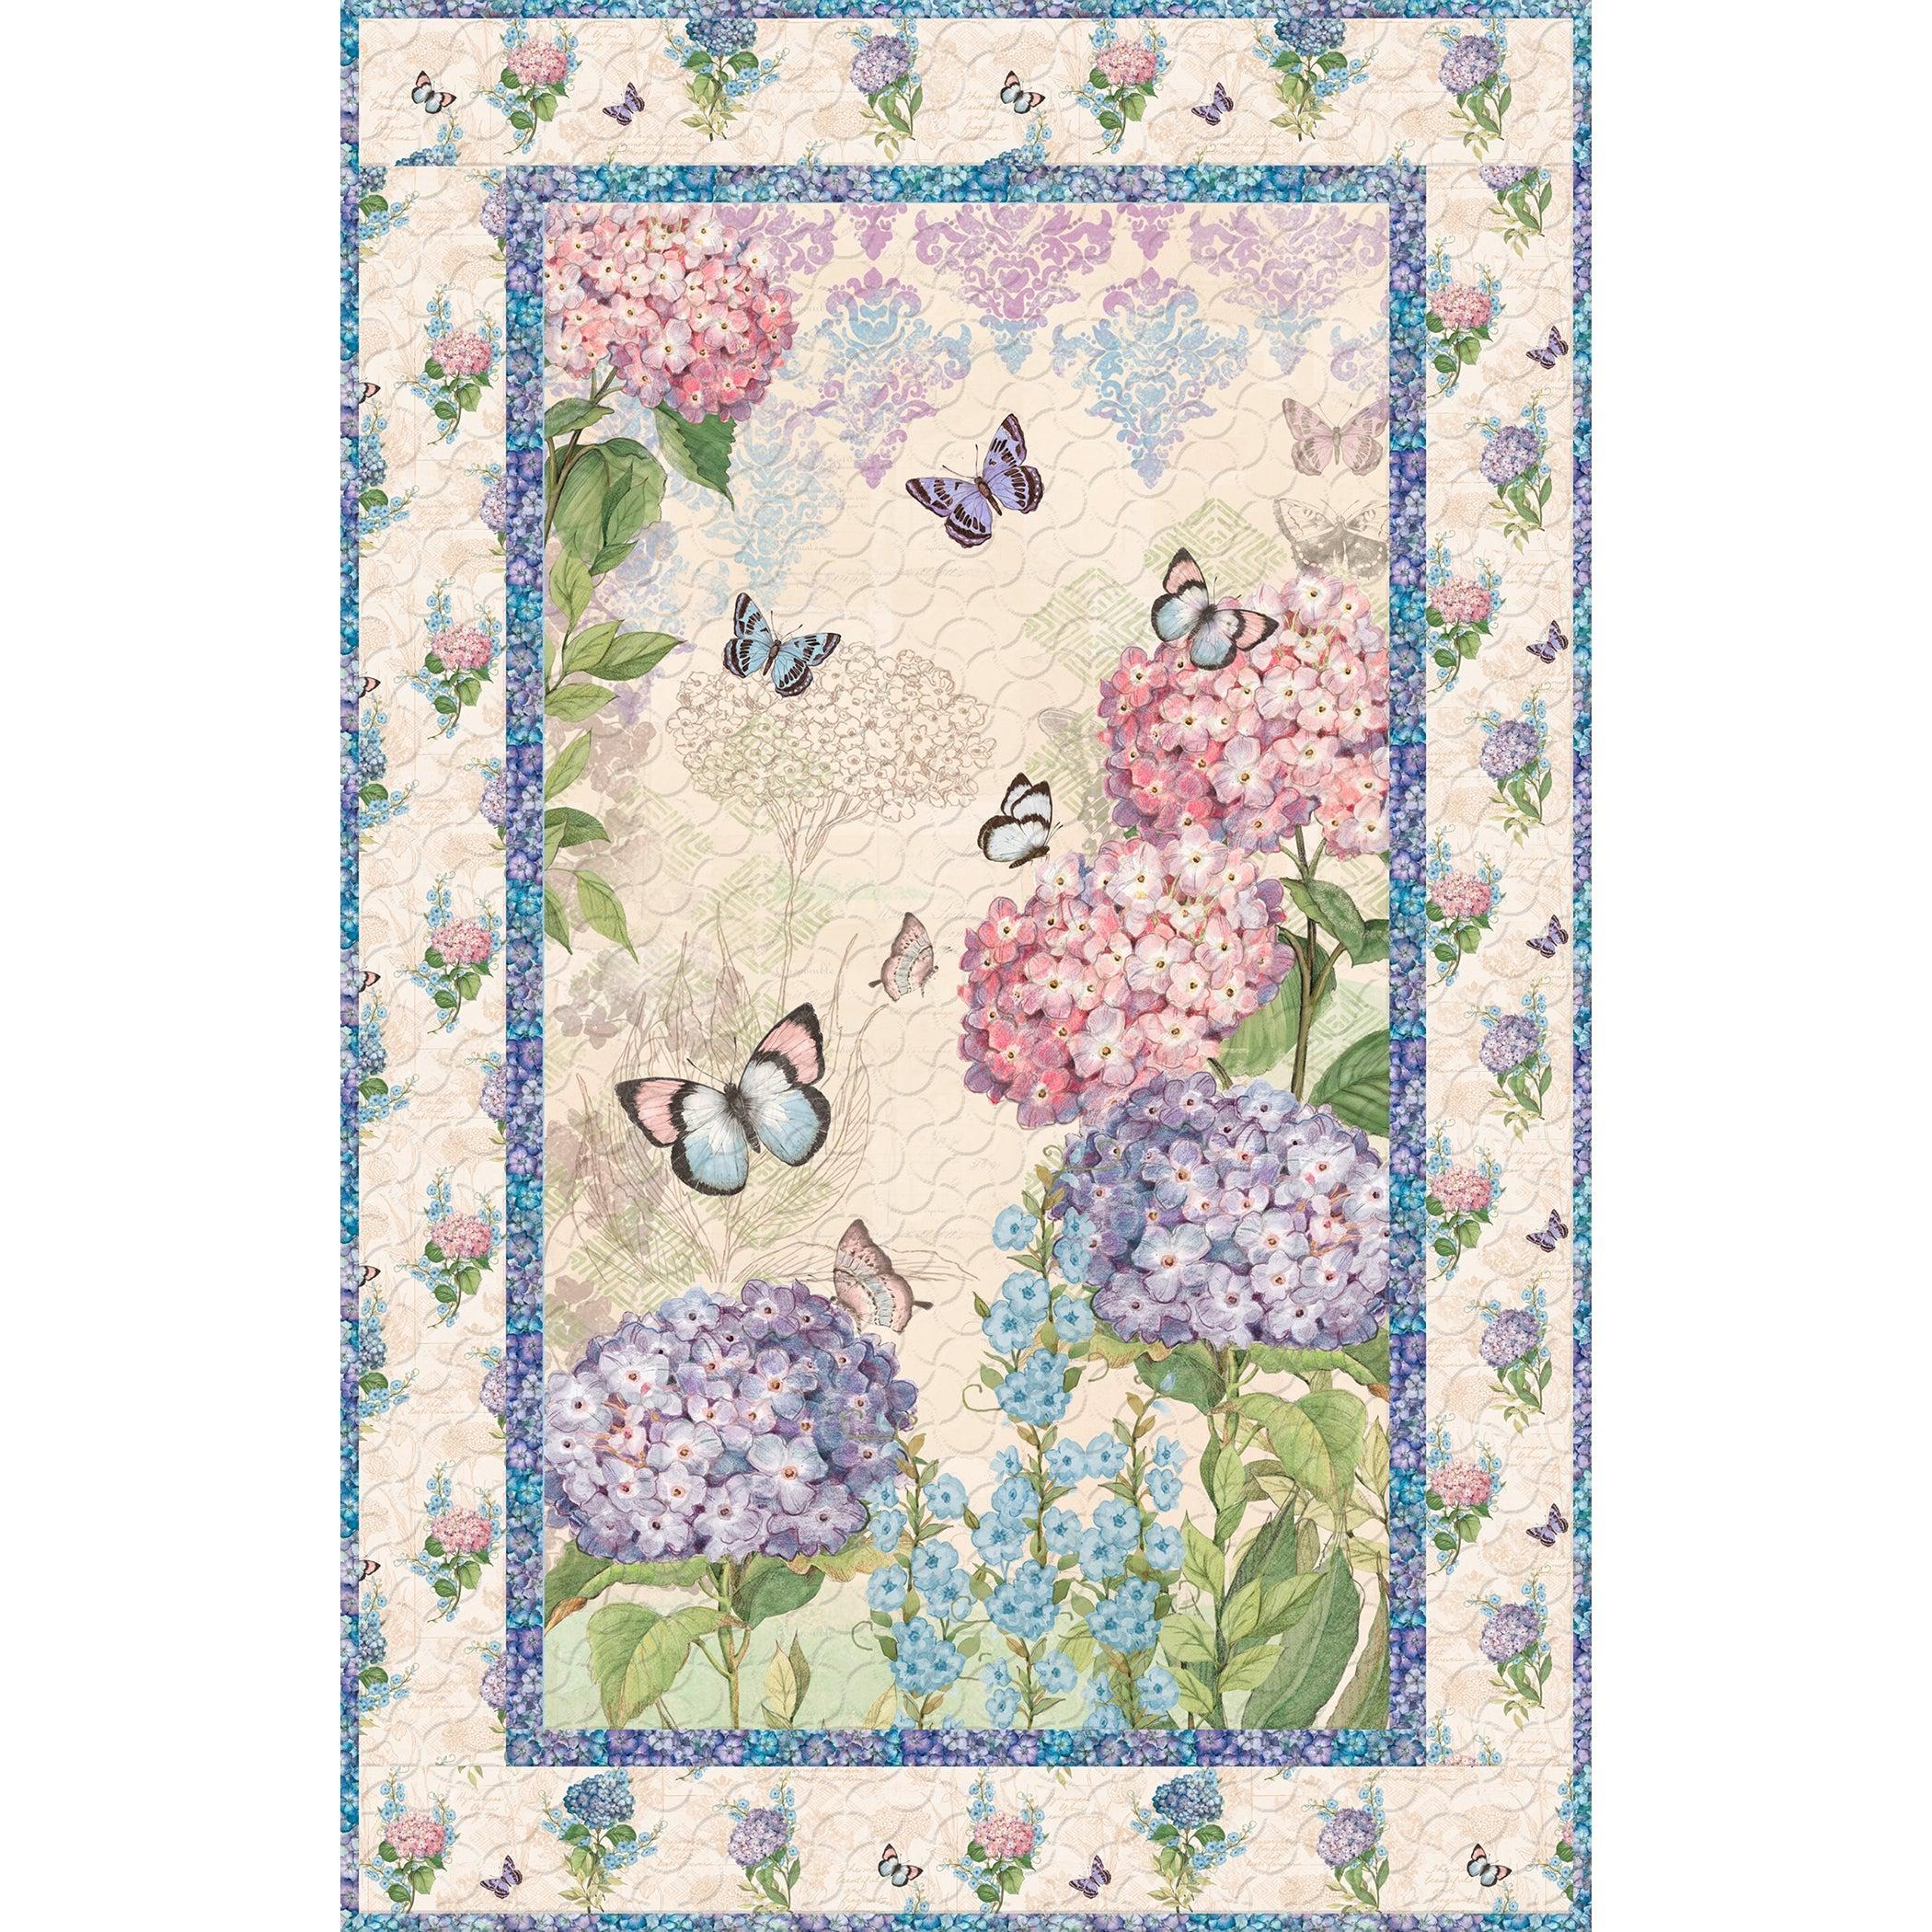 Basic Panel Quilt #1 - Free Digital Download-Wilmington Prints-My Favorite Quilt Store